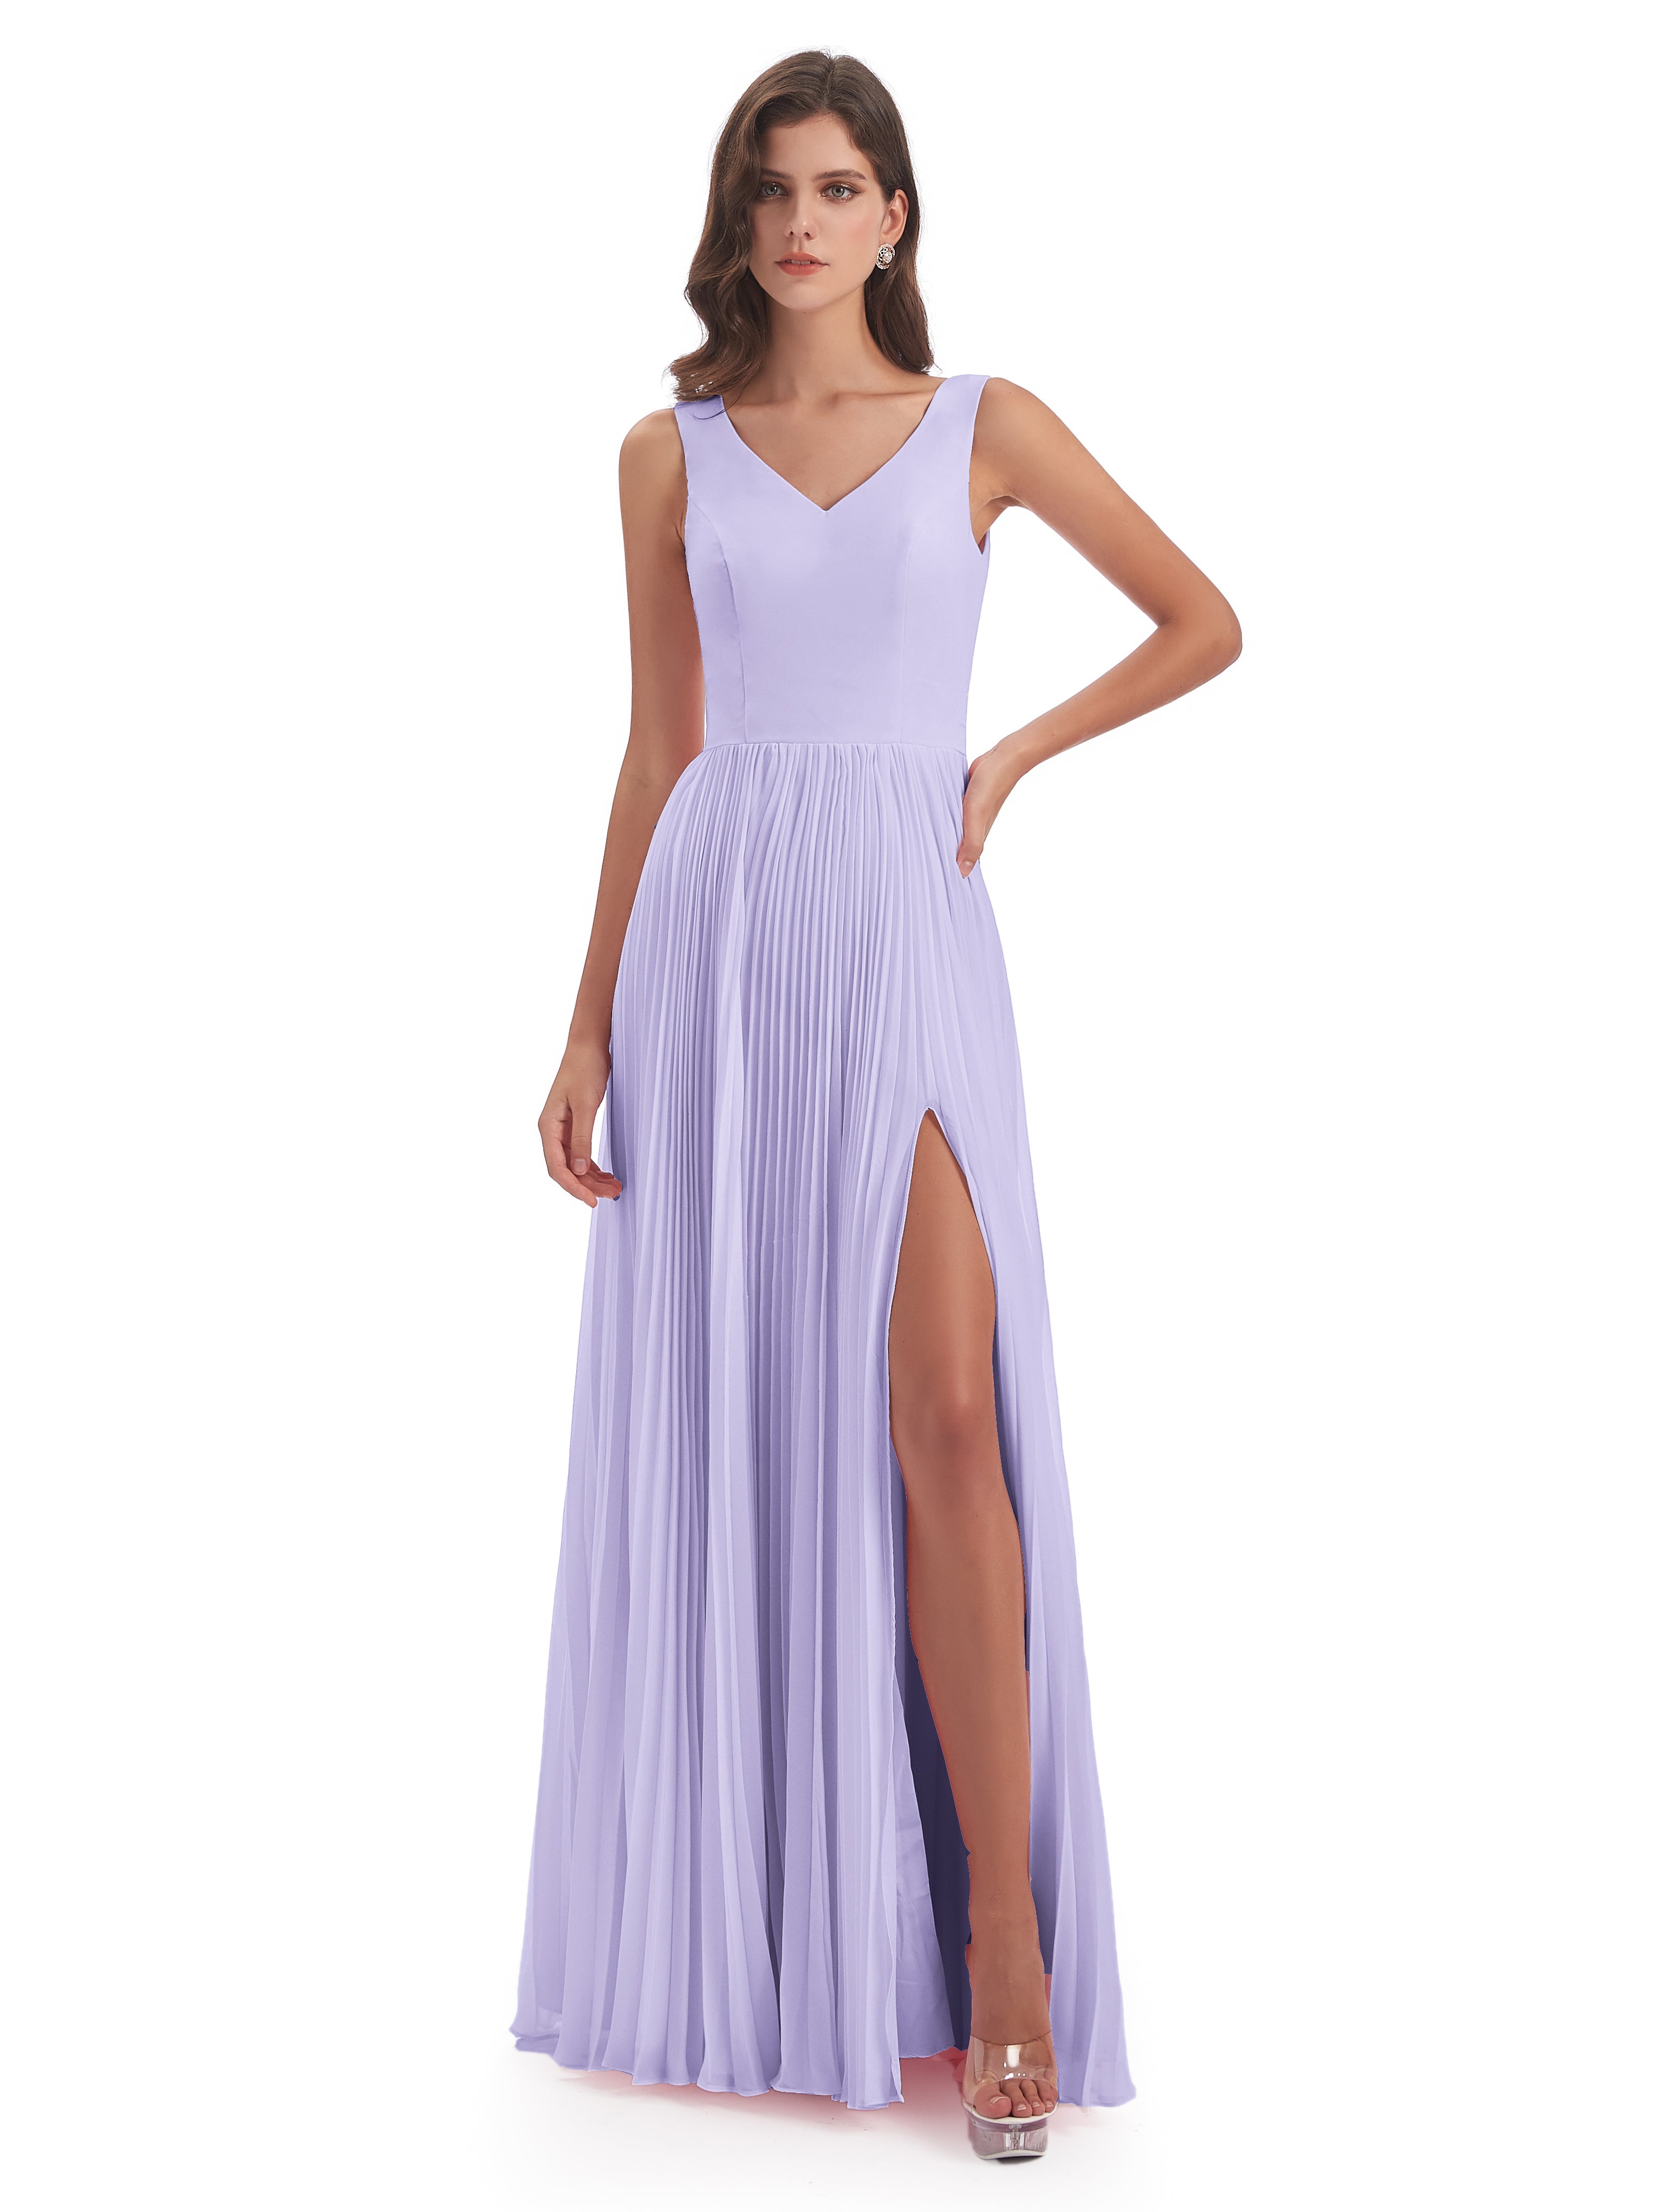 2 Reasons You Should Choose a Lilac Bridesmaid Dress-Cicinia